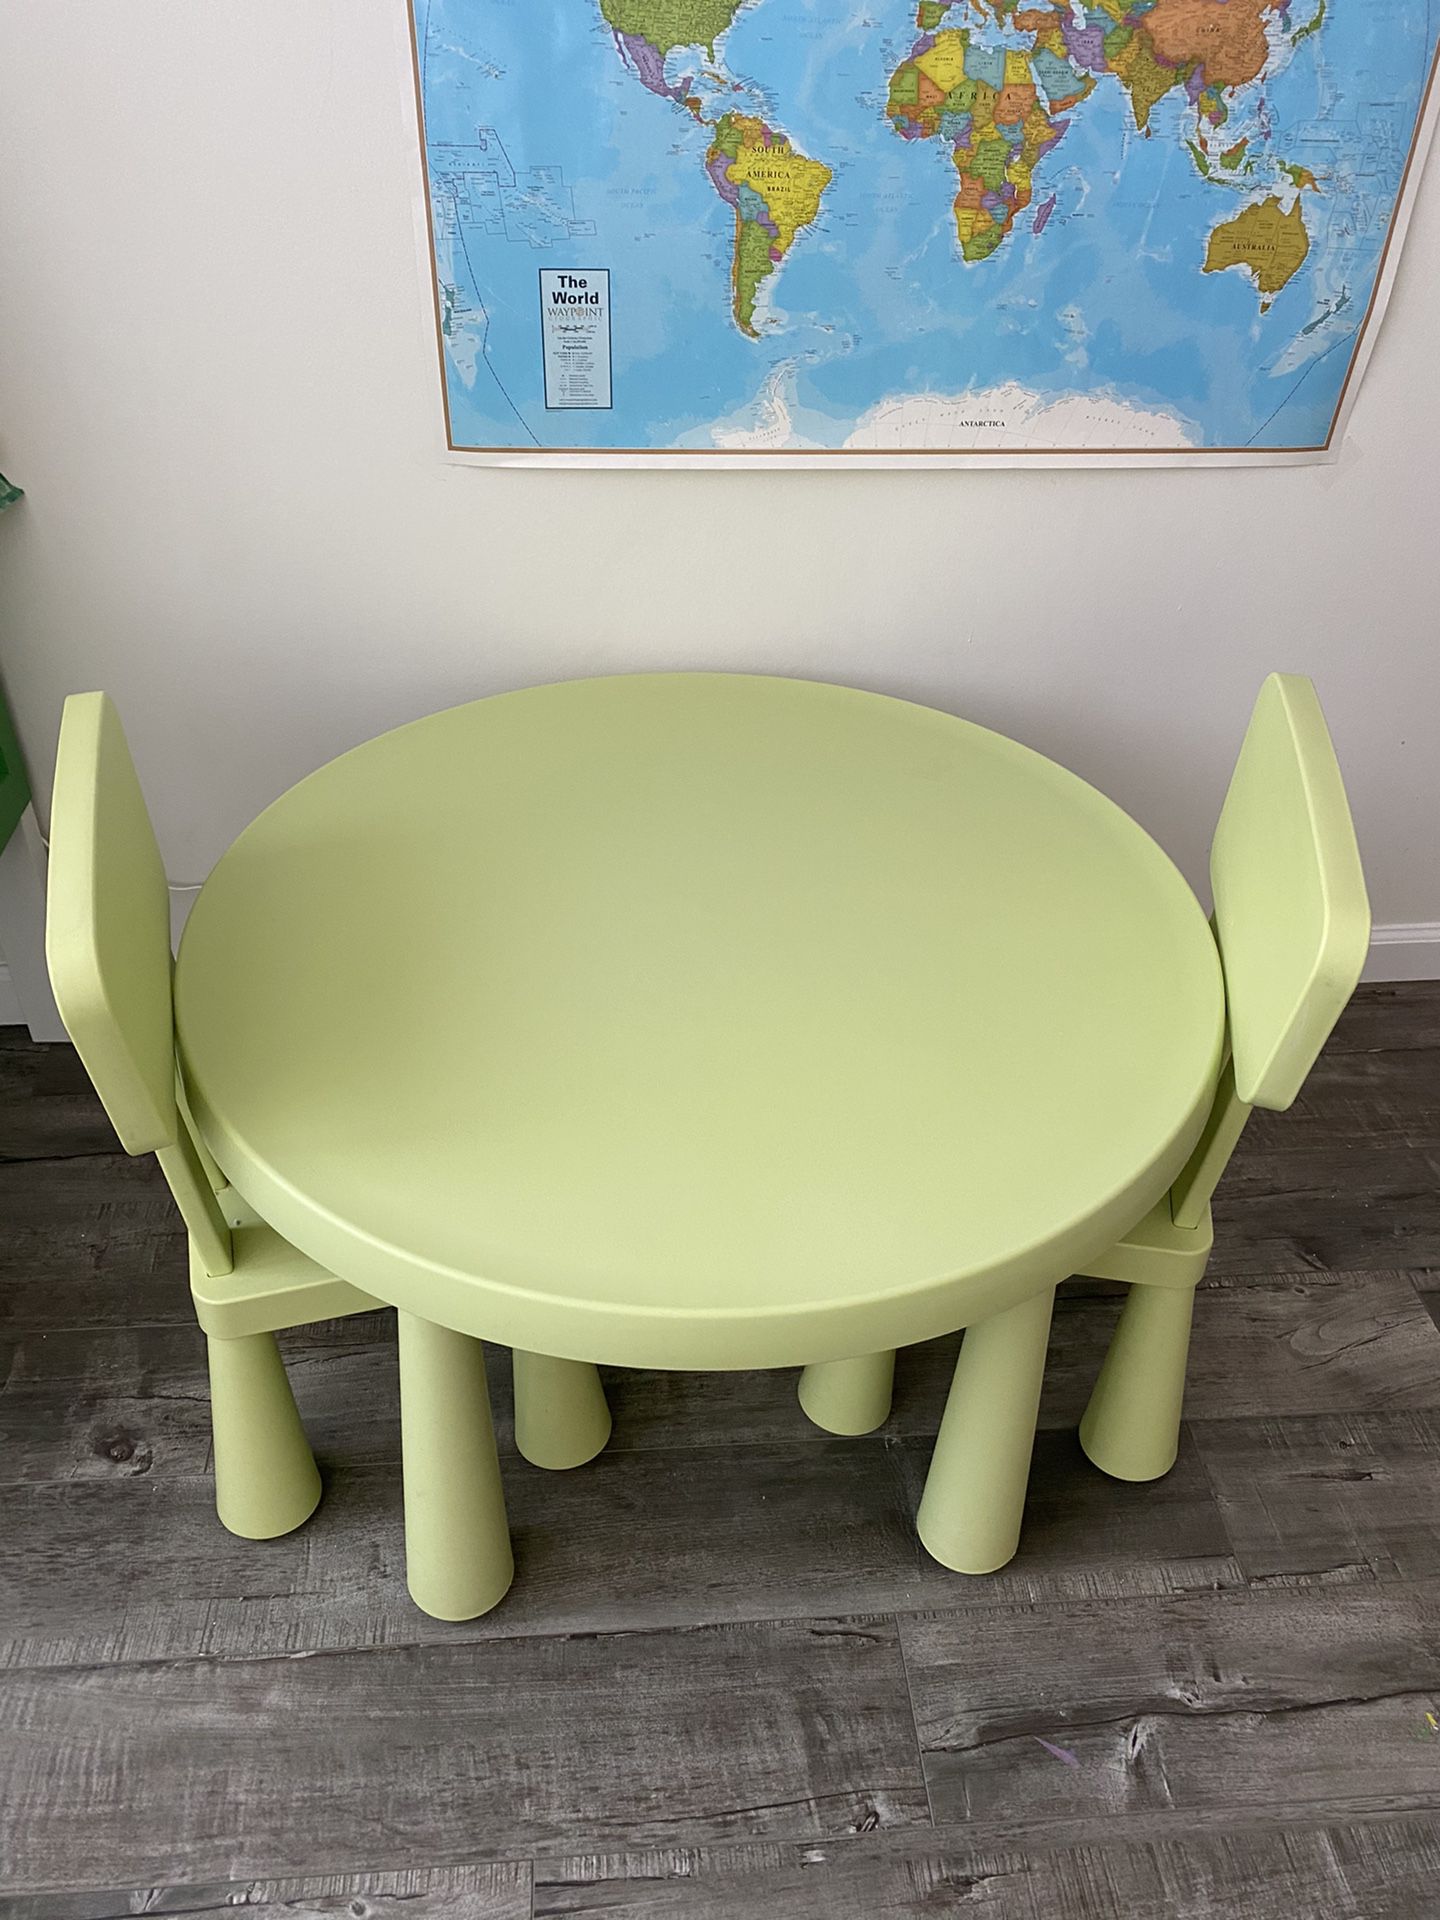 IKEA kids chairs&table